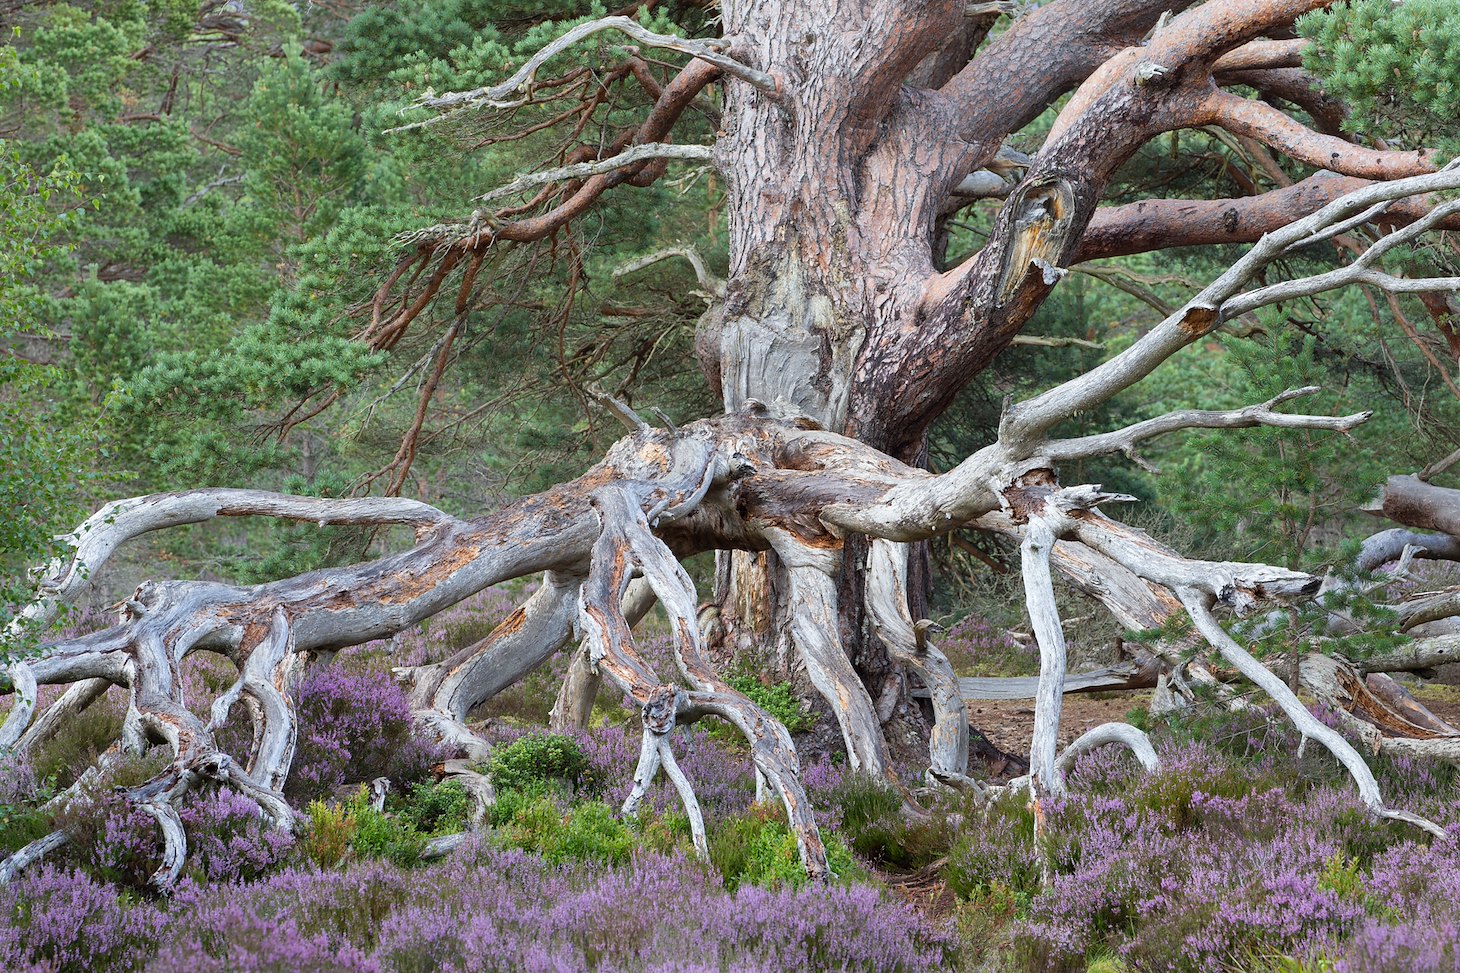 Ancient scots pine in flowering heather, Rothiemurchus Forest, Scotland.